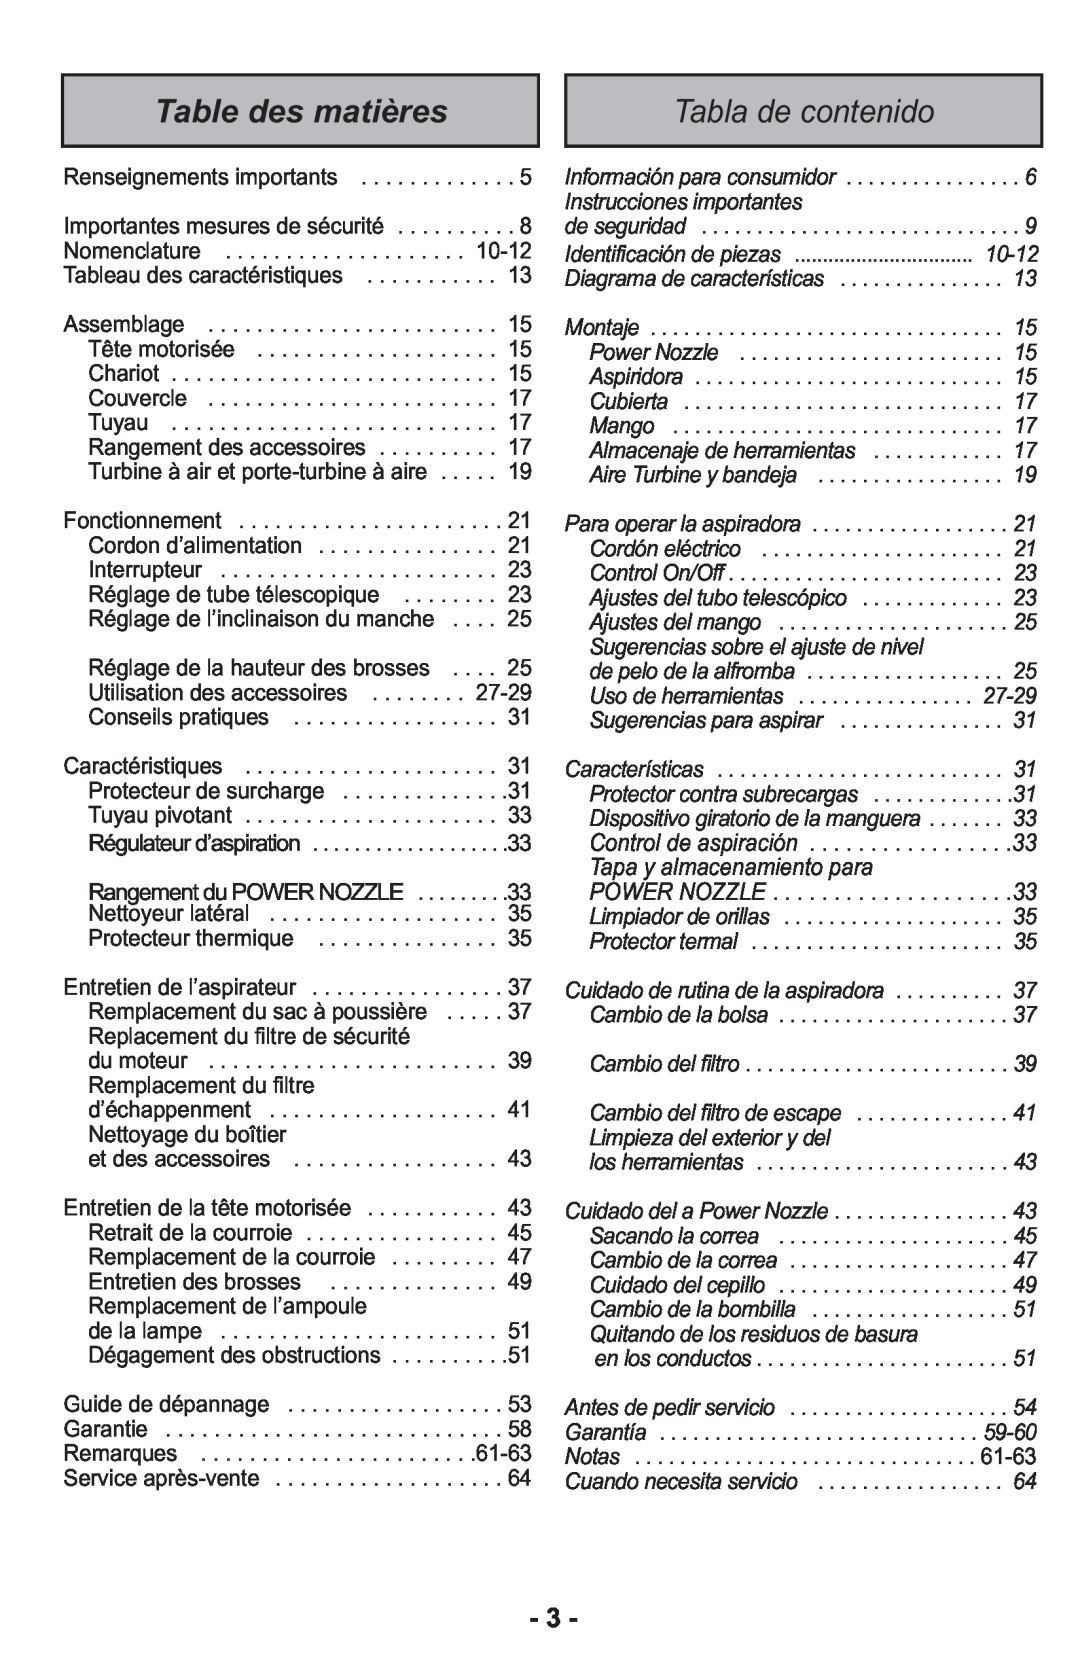 Panasonic MCCG917 manuel dutilisation Table des matières, Tabla de contenido 